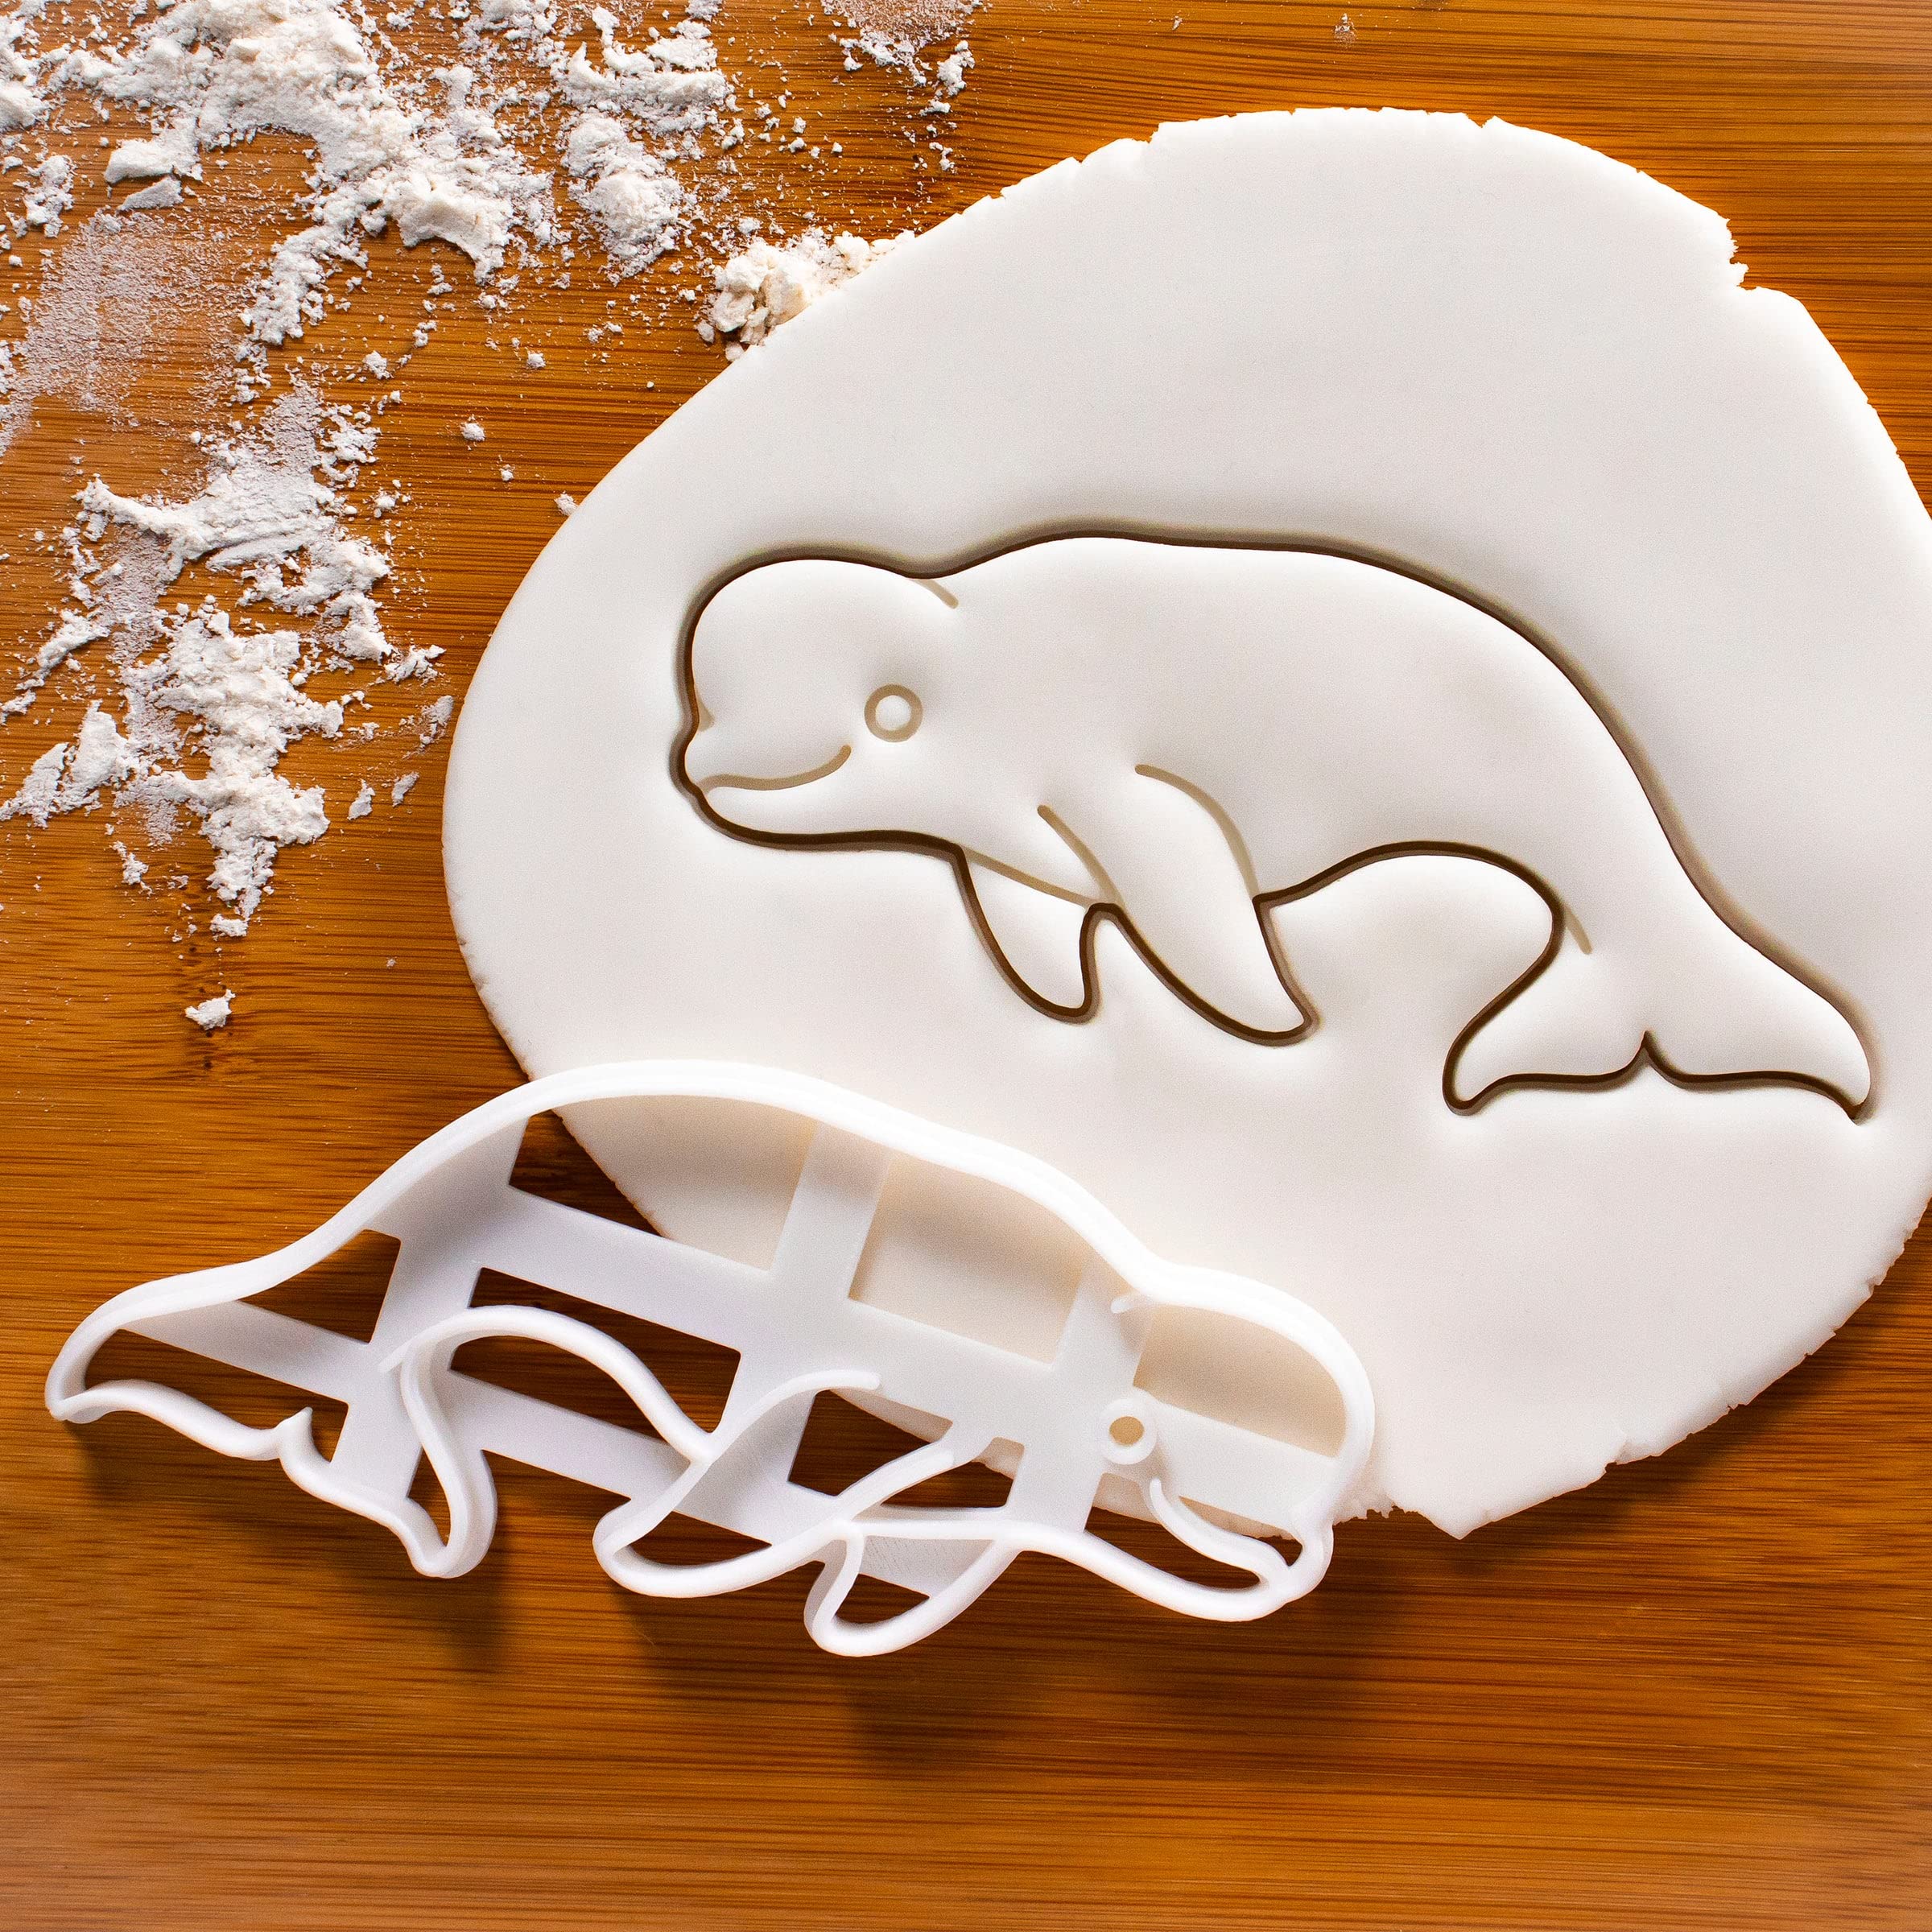 Beluga Whale cookie cutter, 1 piece - Bakerlogy